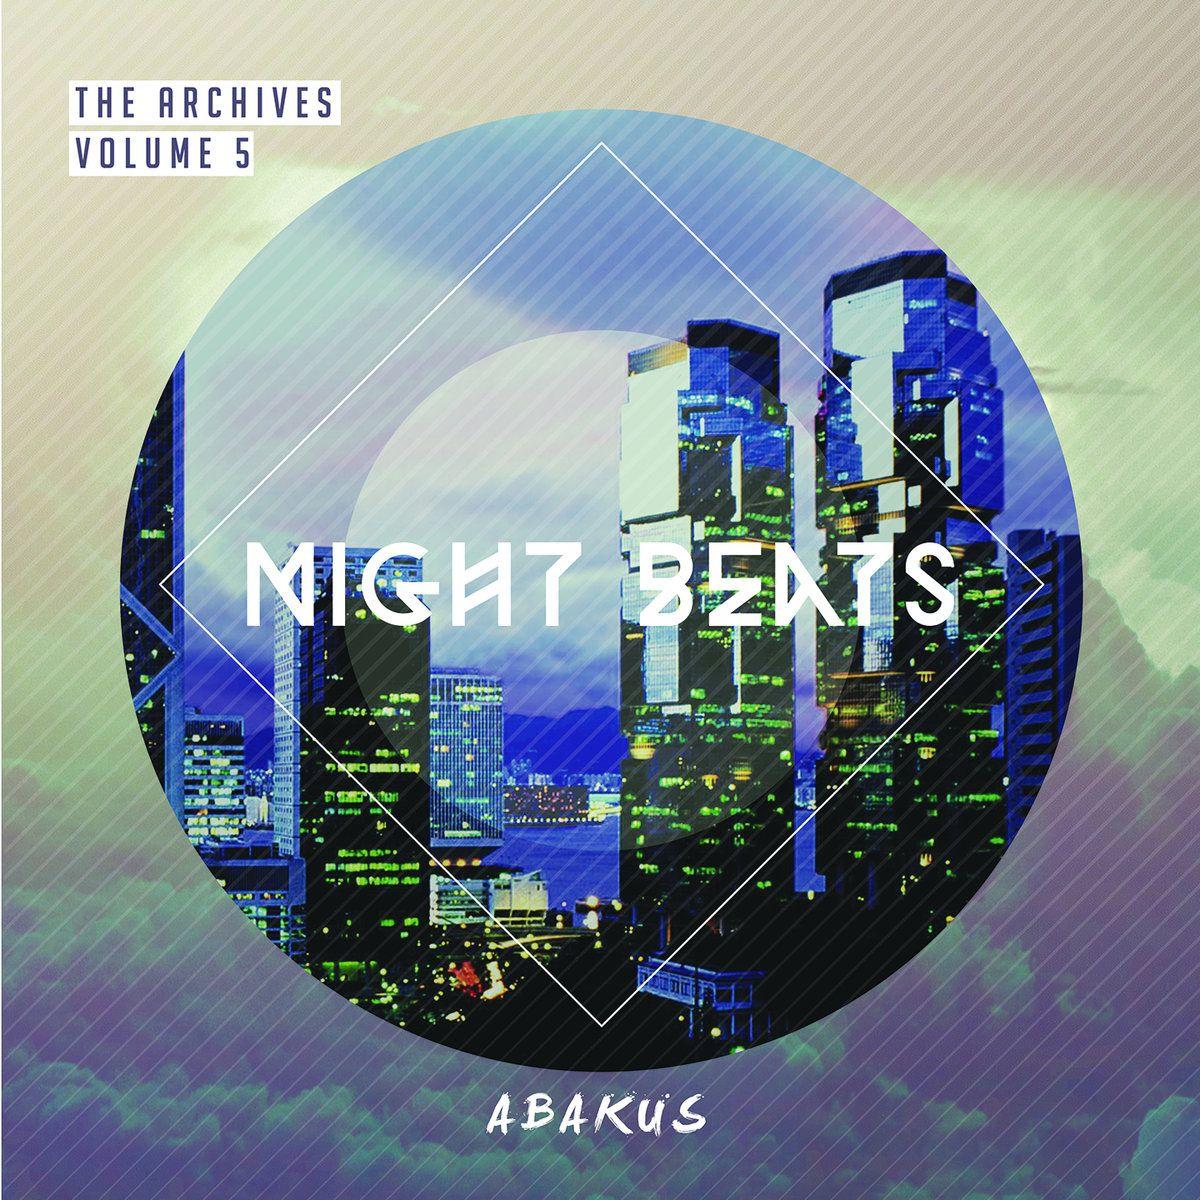 Night Beats Logo - The Archives Vol 5. Night Beats